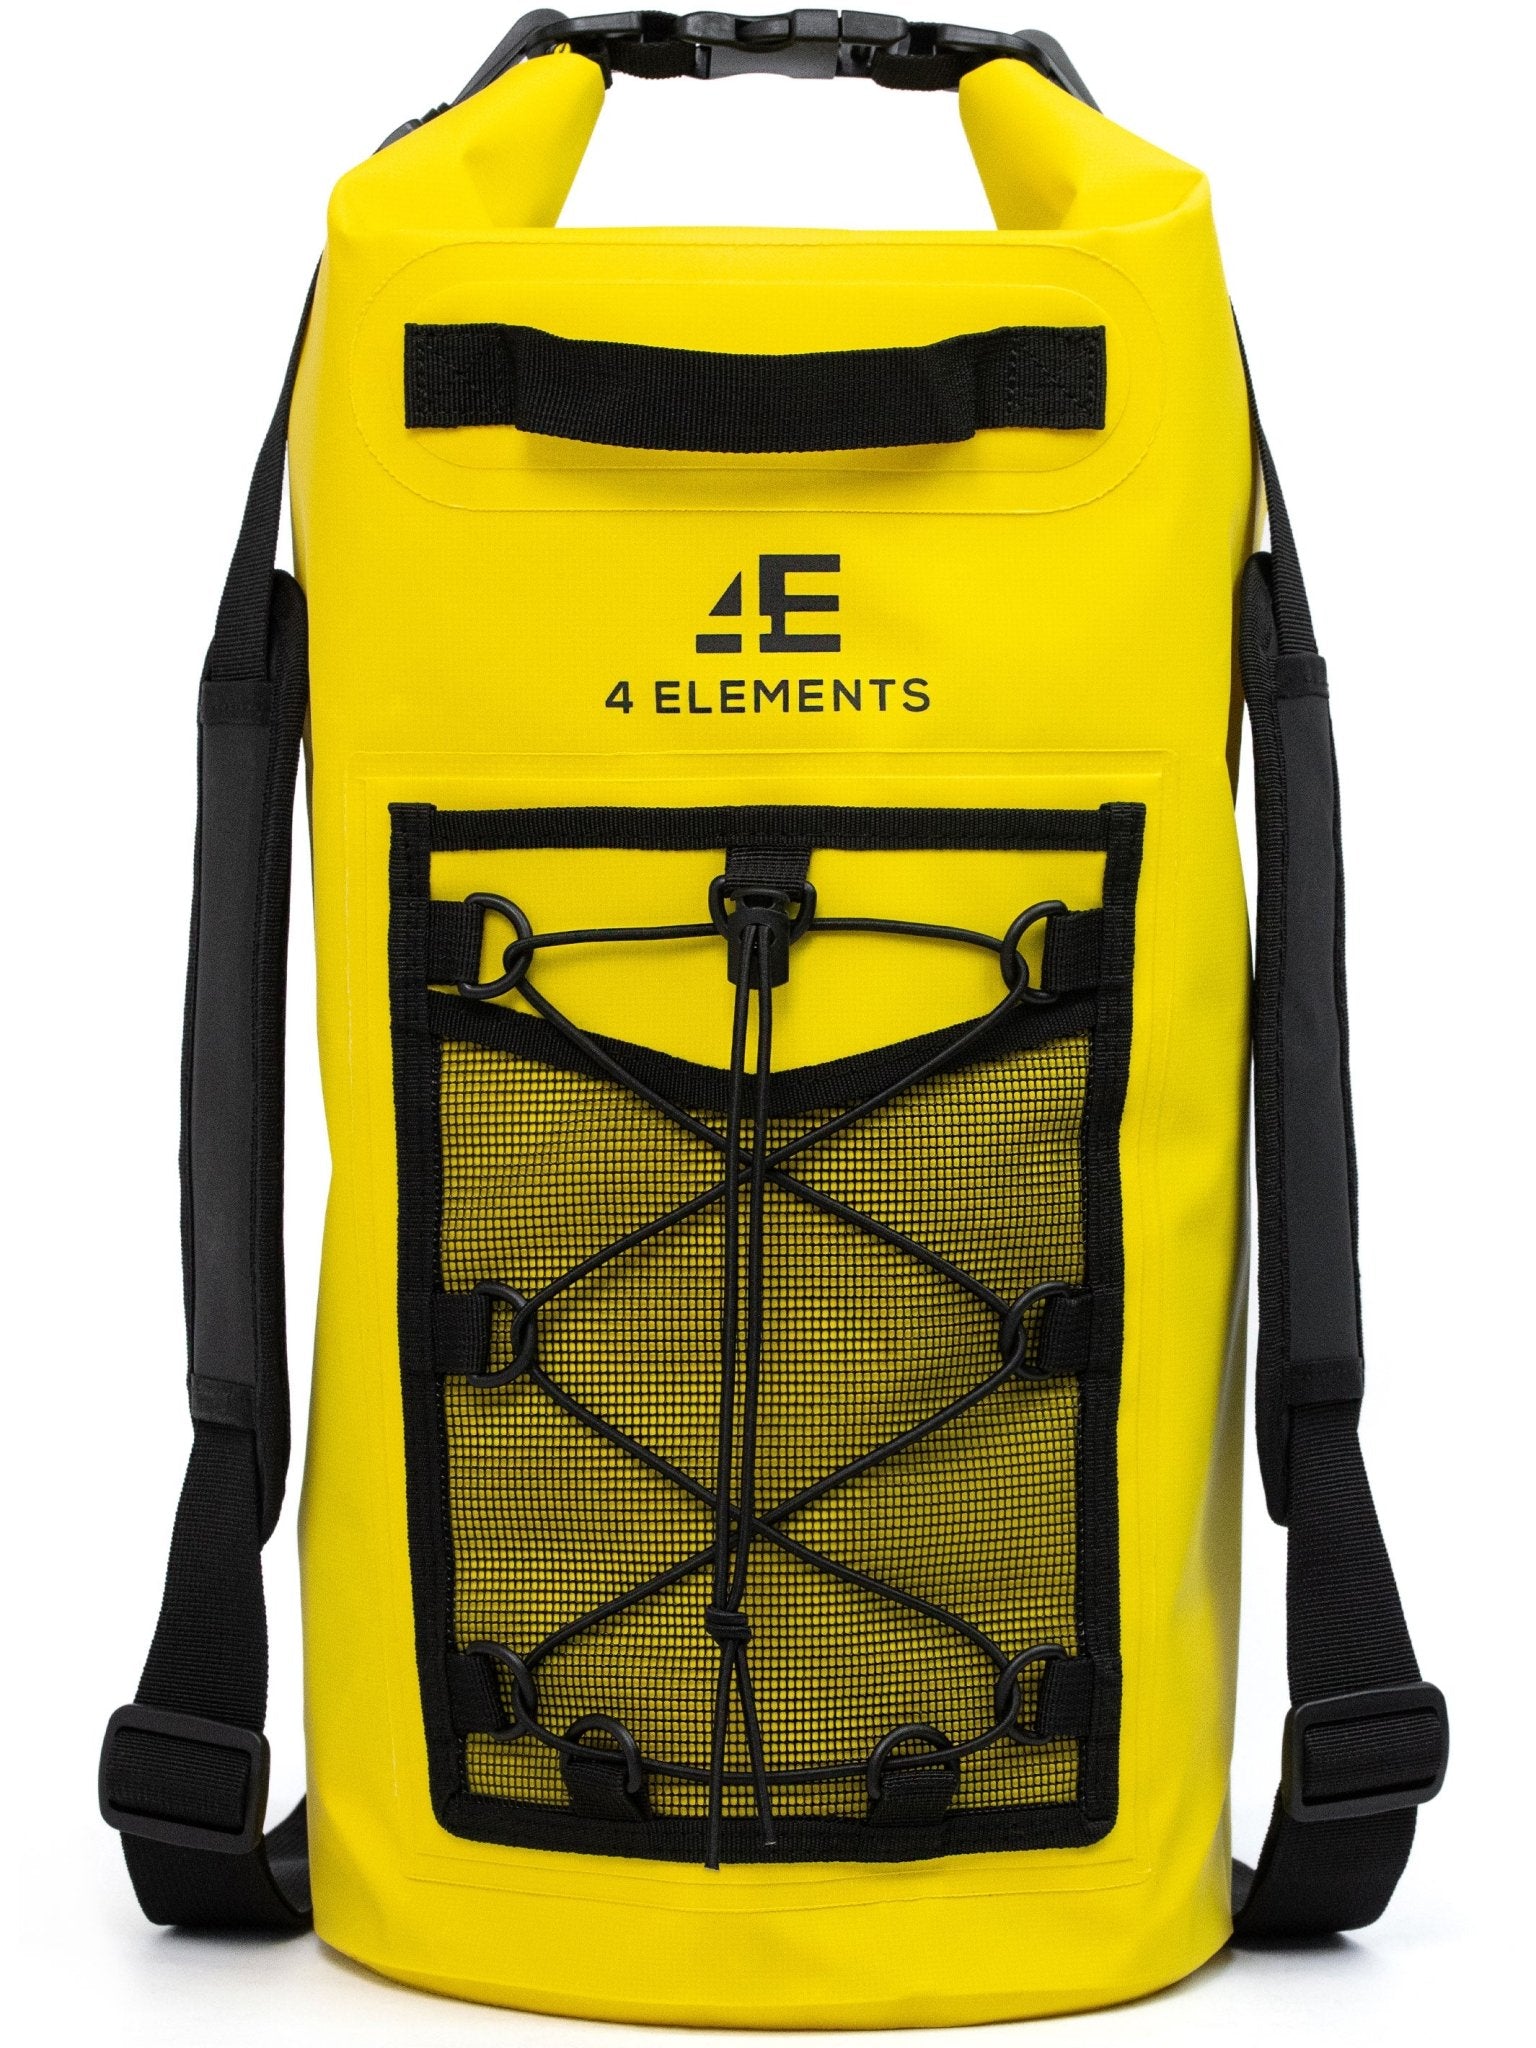 4 Elements Clothing 4 Elements - Waterproof bag and Dry Bag Roll Top waterproof Rucksack, Wet bag & Hiking, waters sports or camping bag, 20L drybag Backpacks